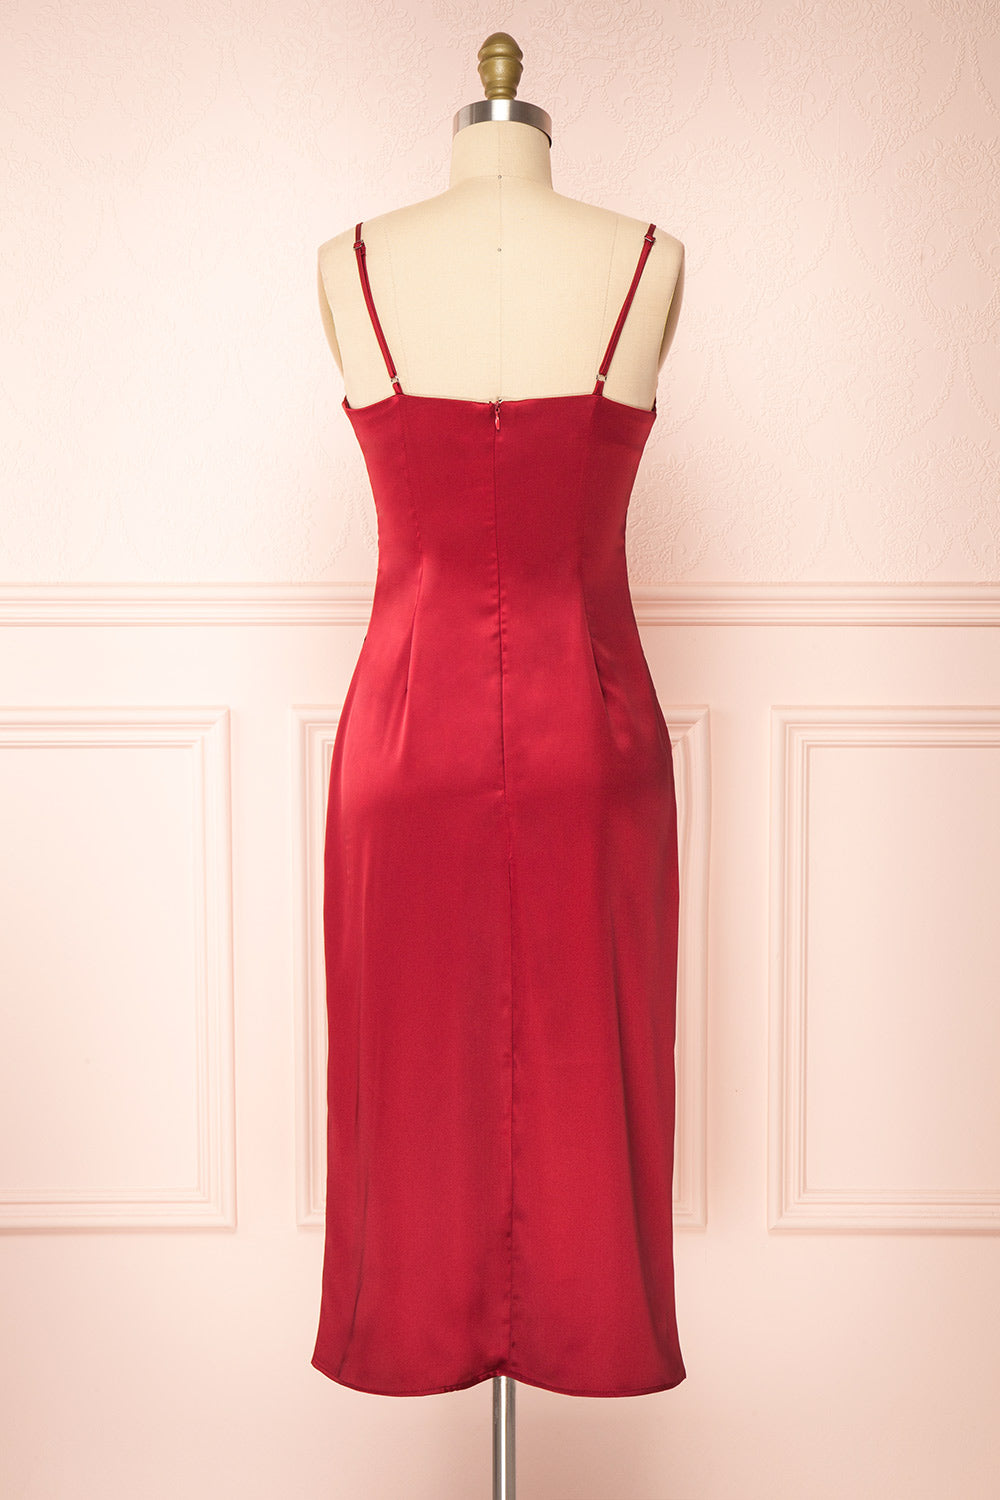 Chloe Wine Red Silky Midi Slip Dress | Boutique 1861 back view 